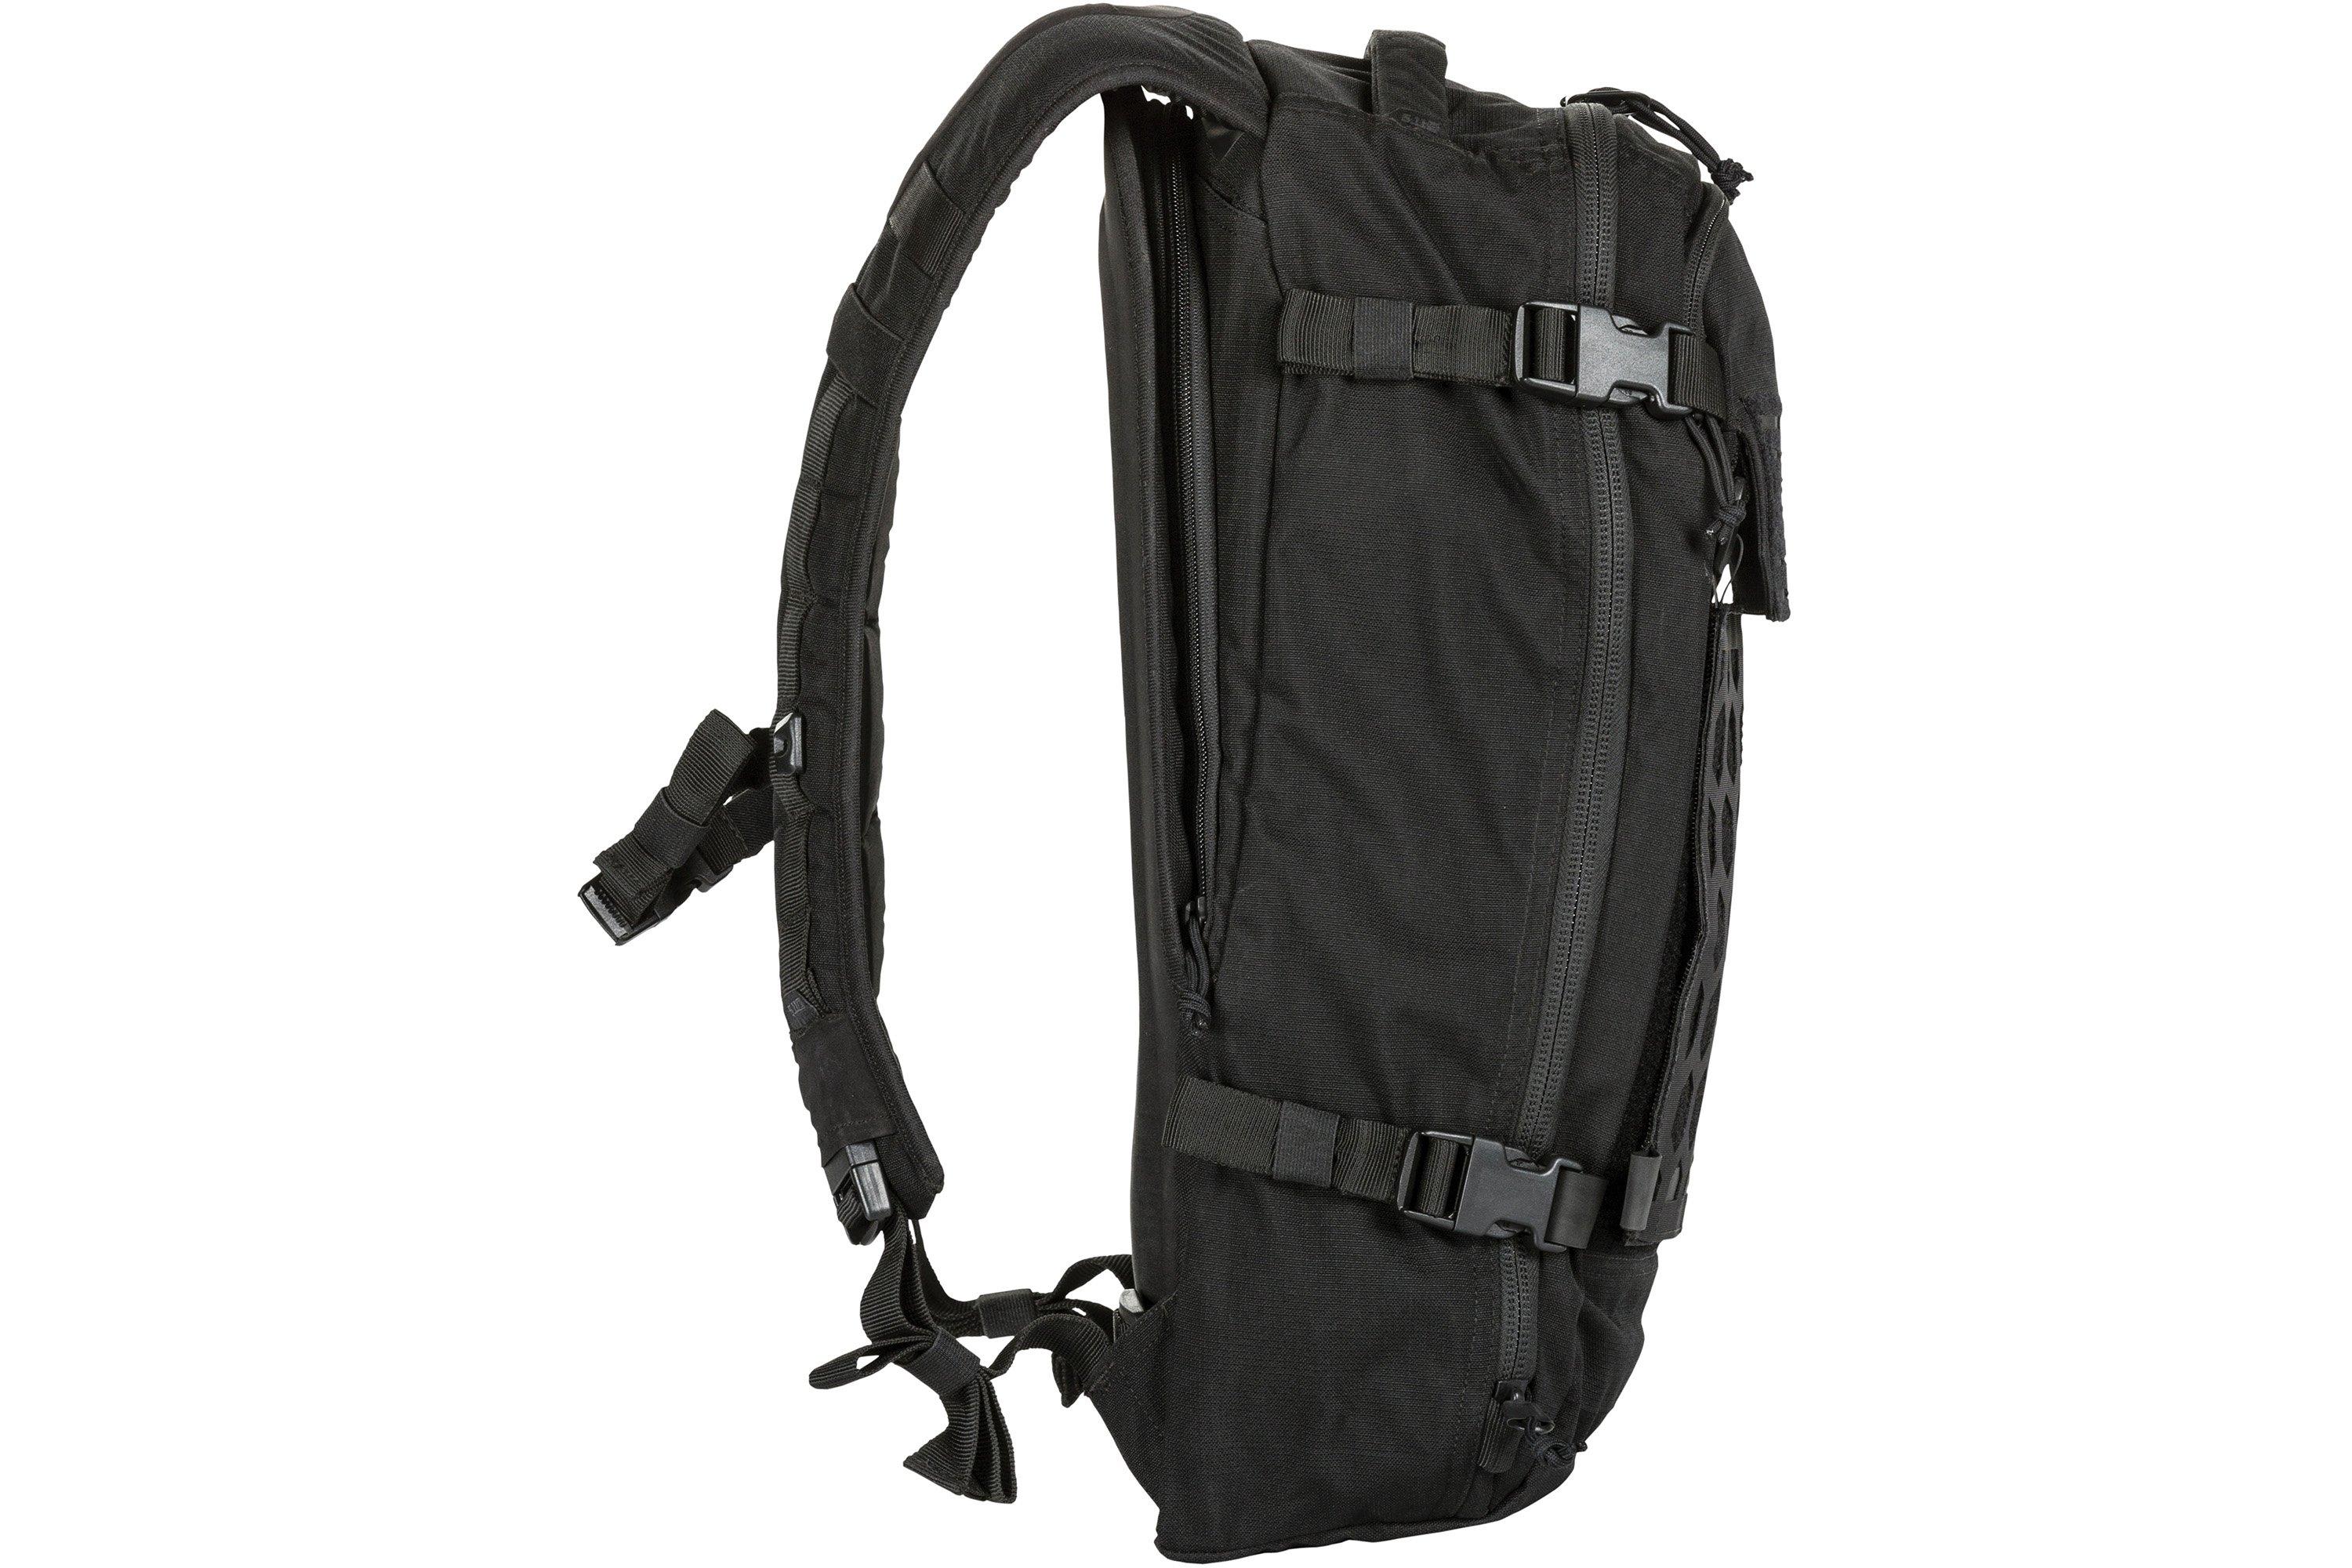 5.11 AMP12 backpack black, 25 litres | Advantageously shopping at 